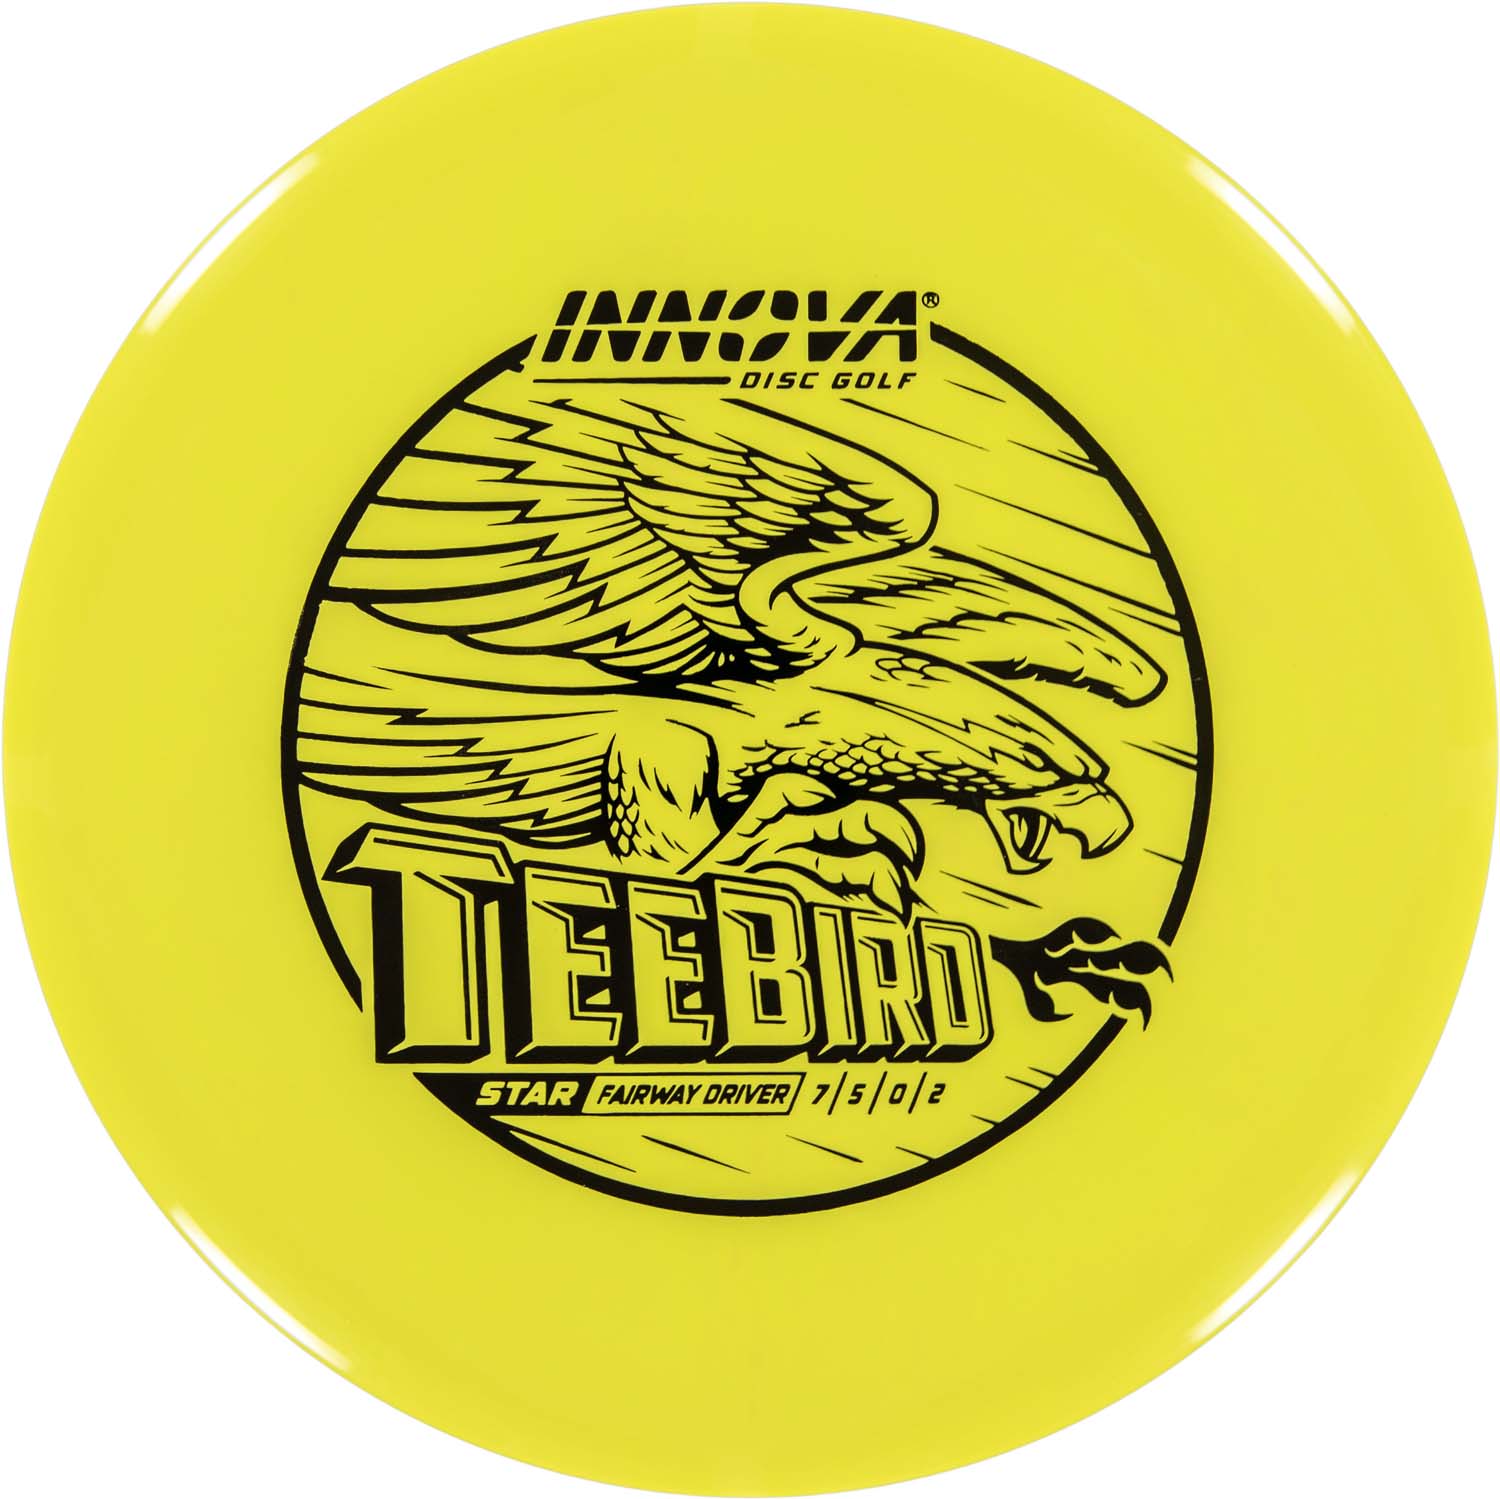 Star TeeBird from Disc Golf United